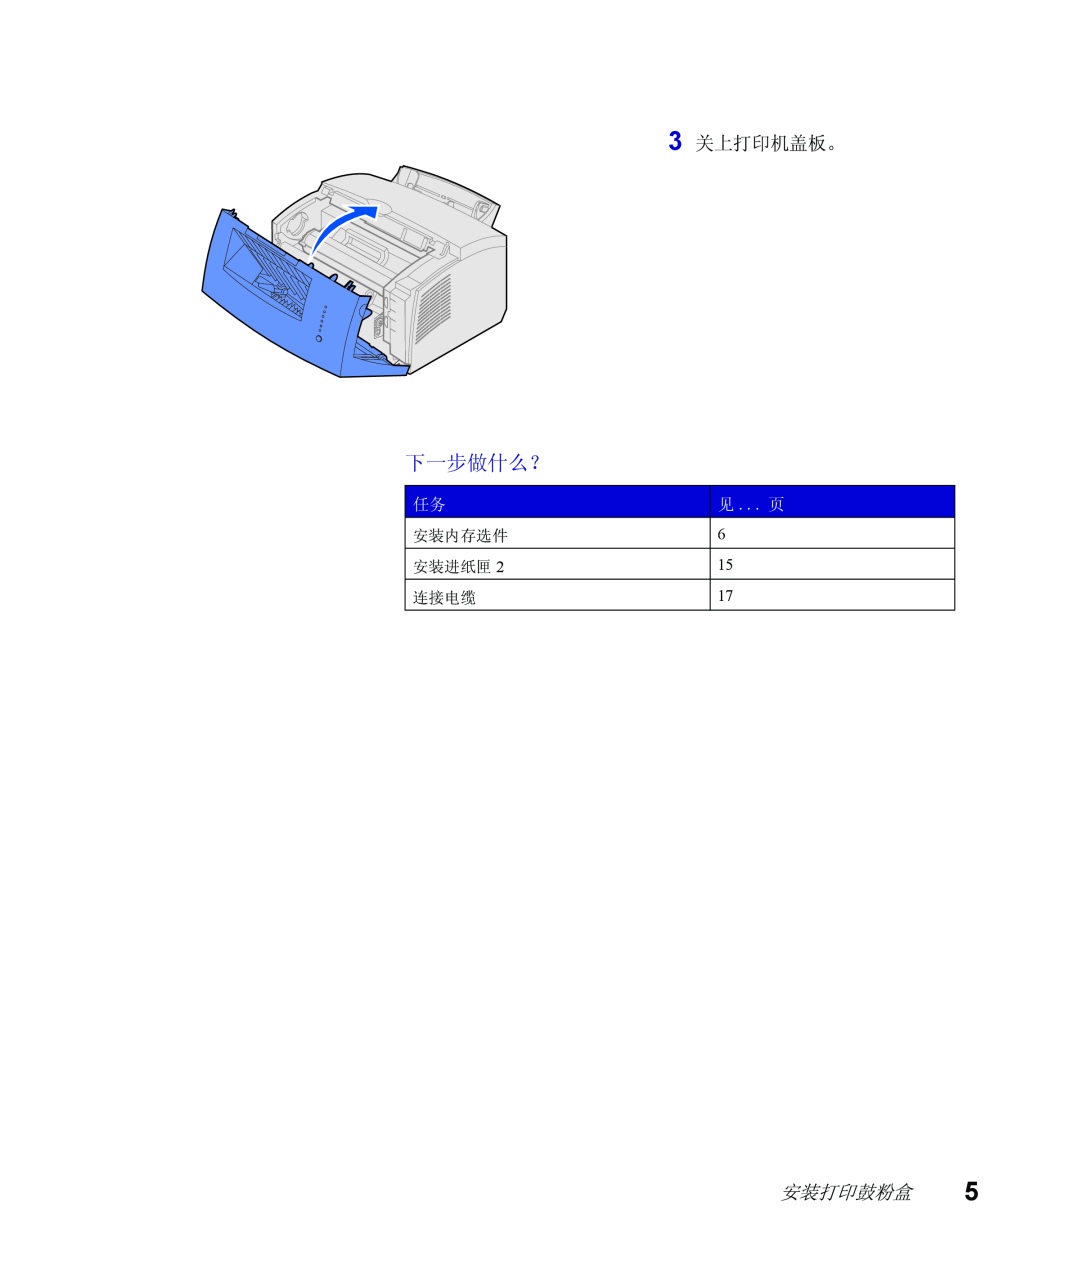 Lexmark Infoprint 1116 setup guide 下一步做什么？, 3 关上打印机盖板。, 安装打印鼓粉盒, 见 ... 页 